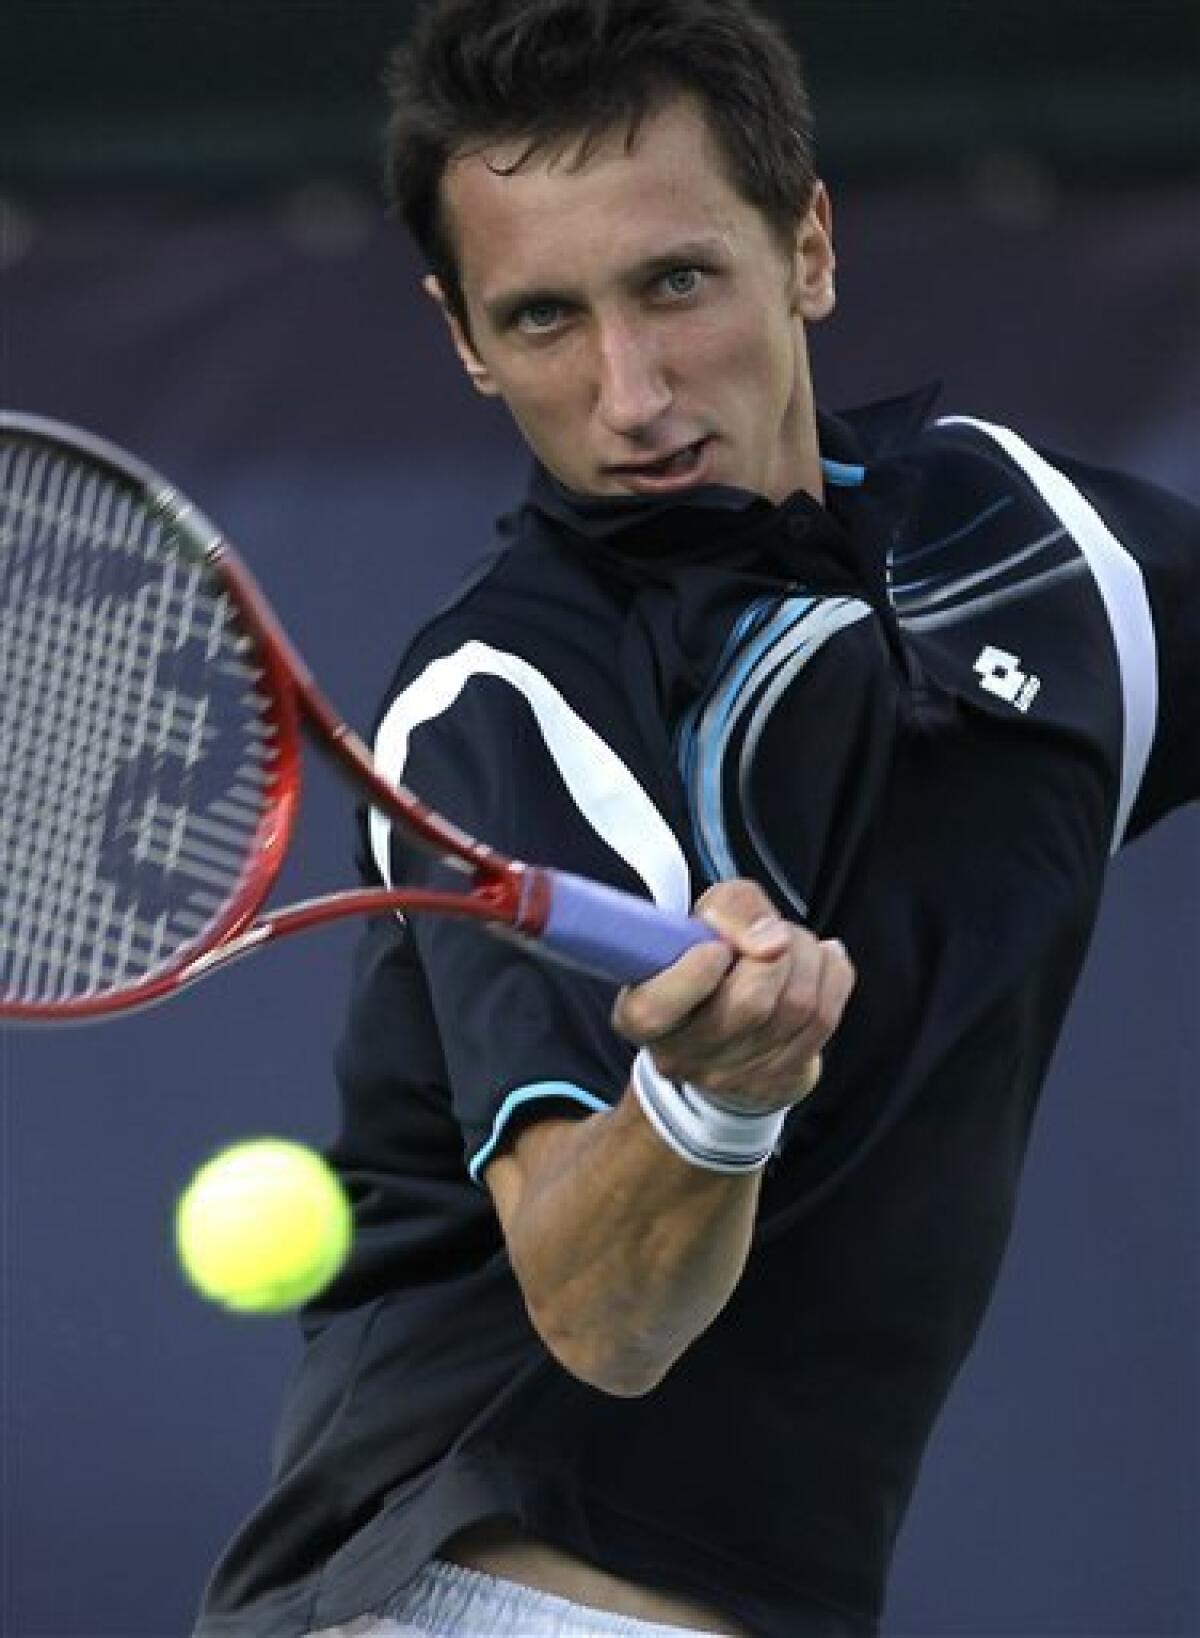 Dubai tennis: Novak Djokovic says losses no longer hurt him badly